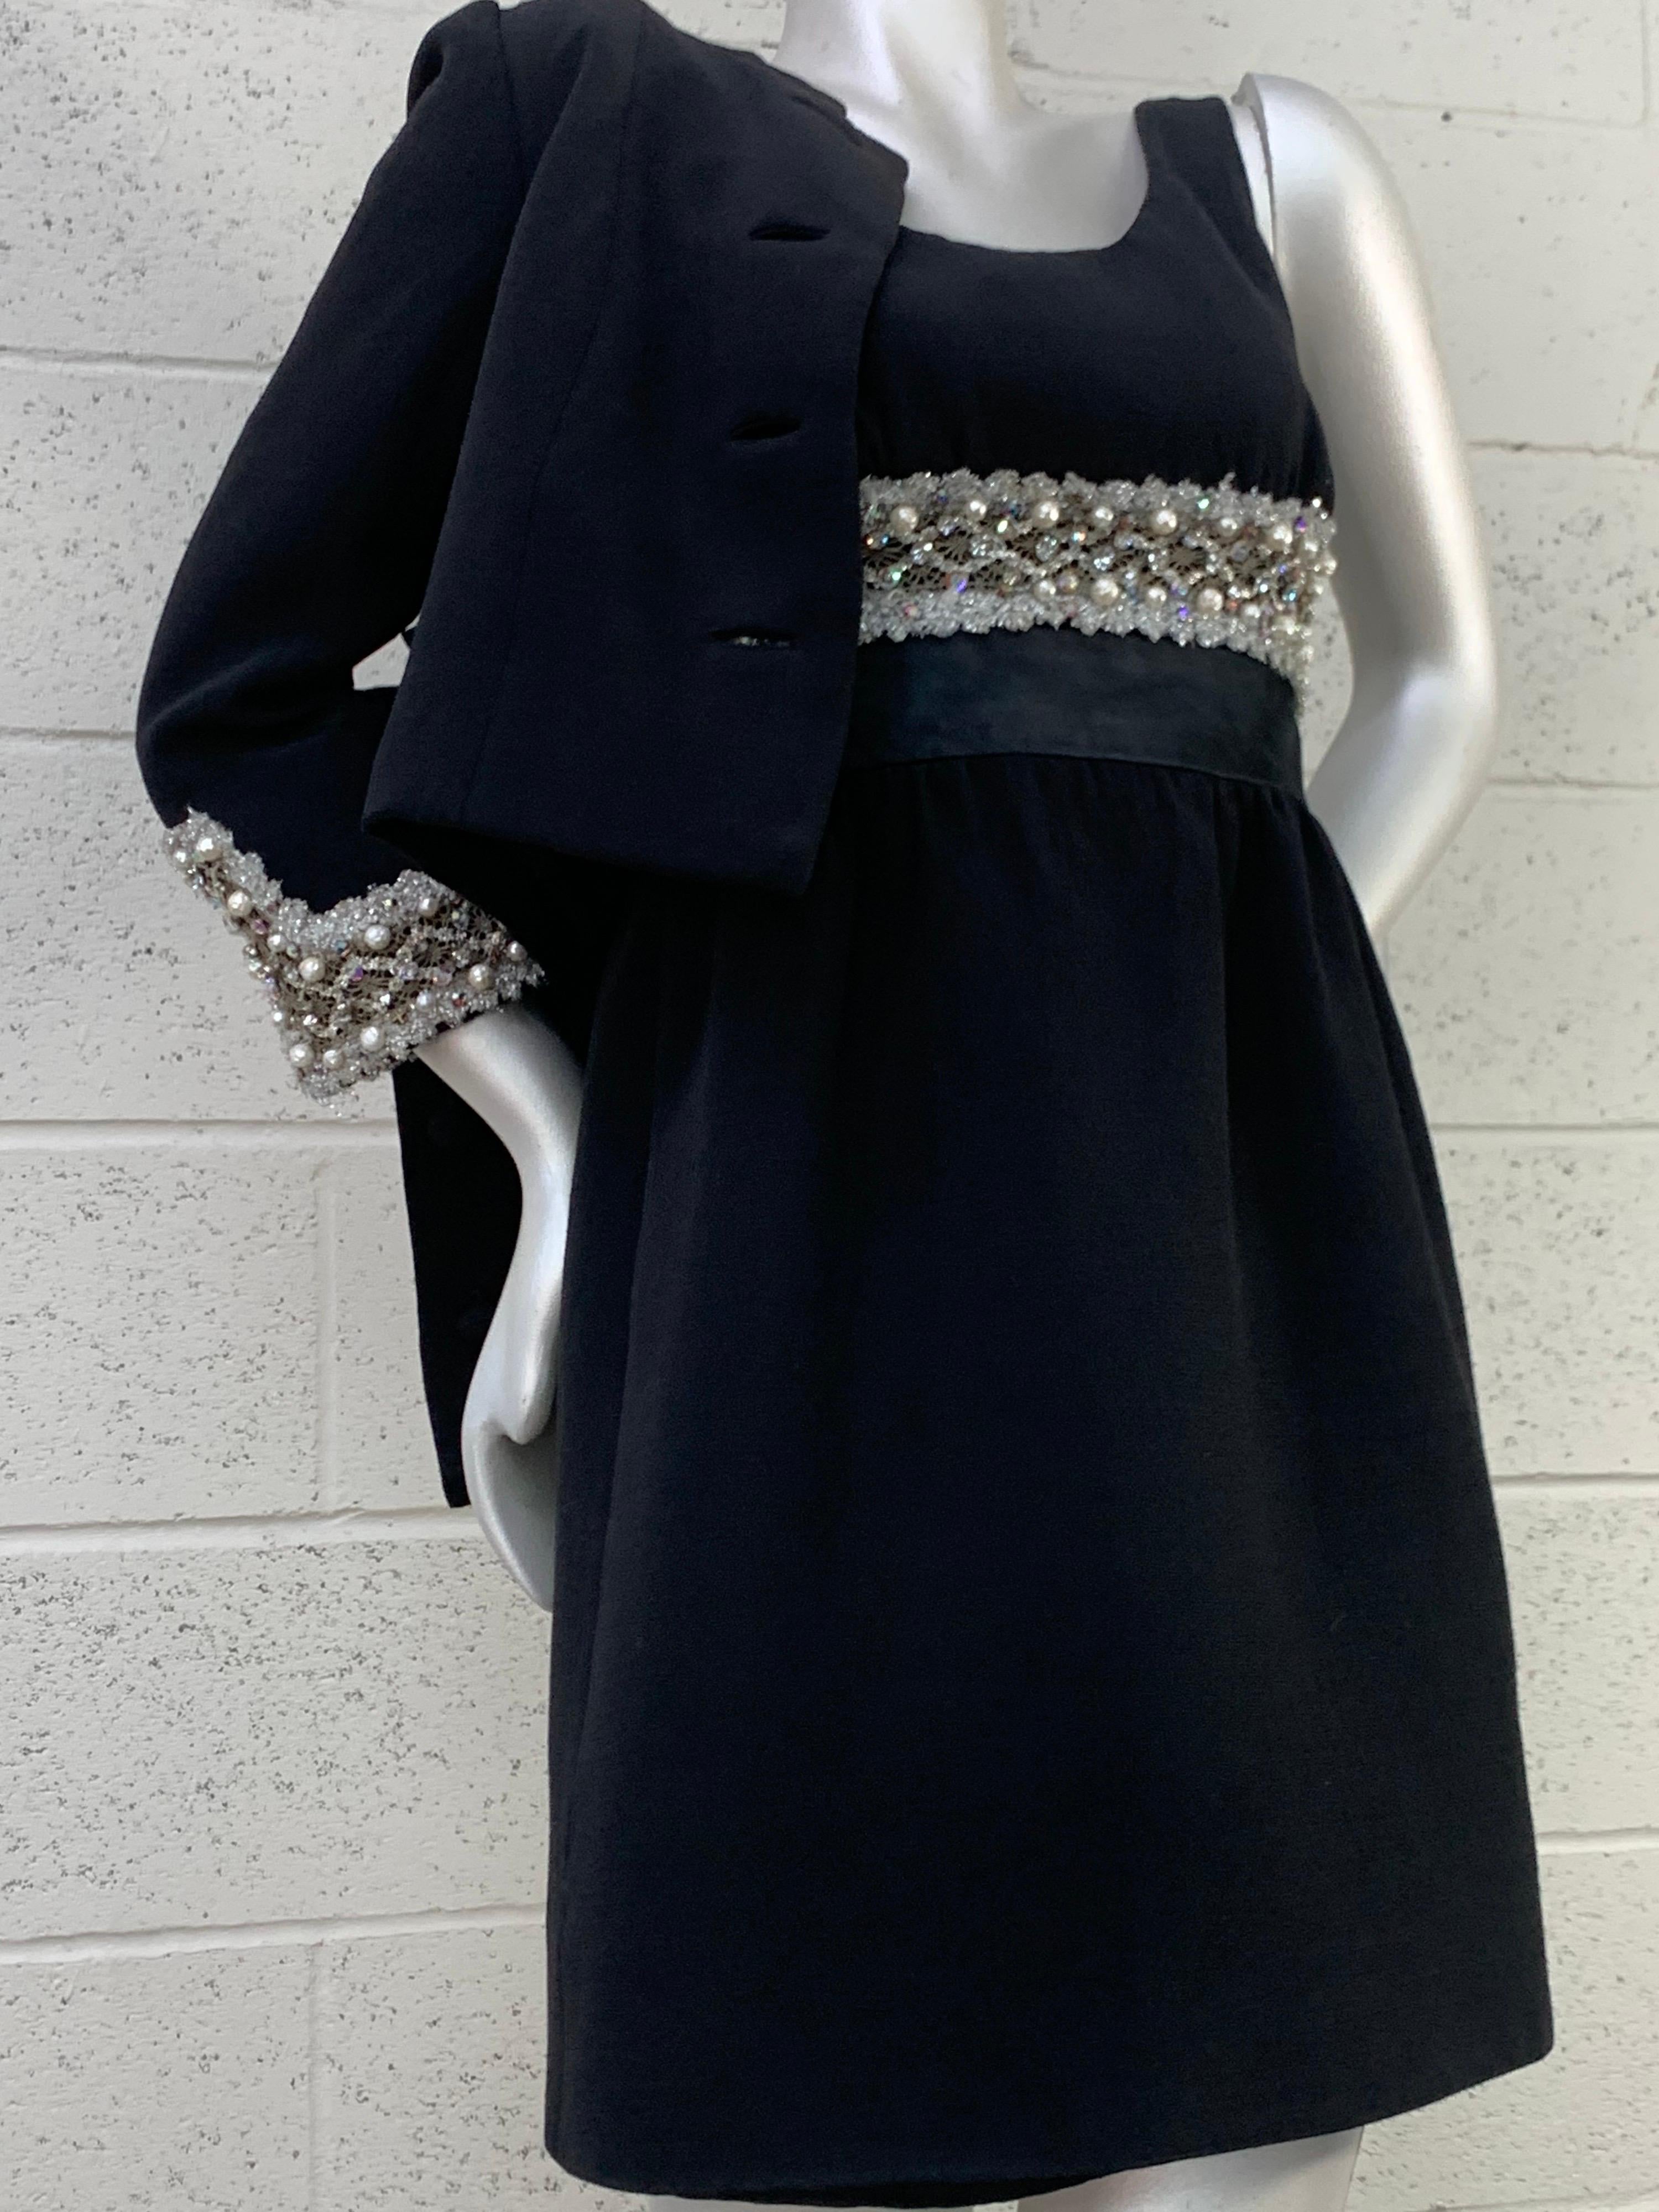 Sophie-Saks Fifth Avenue - Robe babydoll noire et veste boléro en dentelle, style mod, 1960 en vente 7